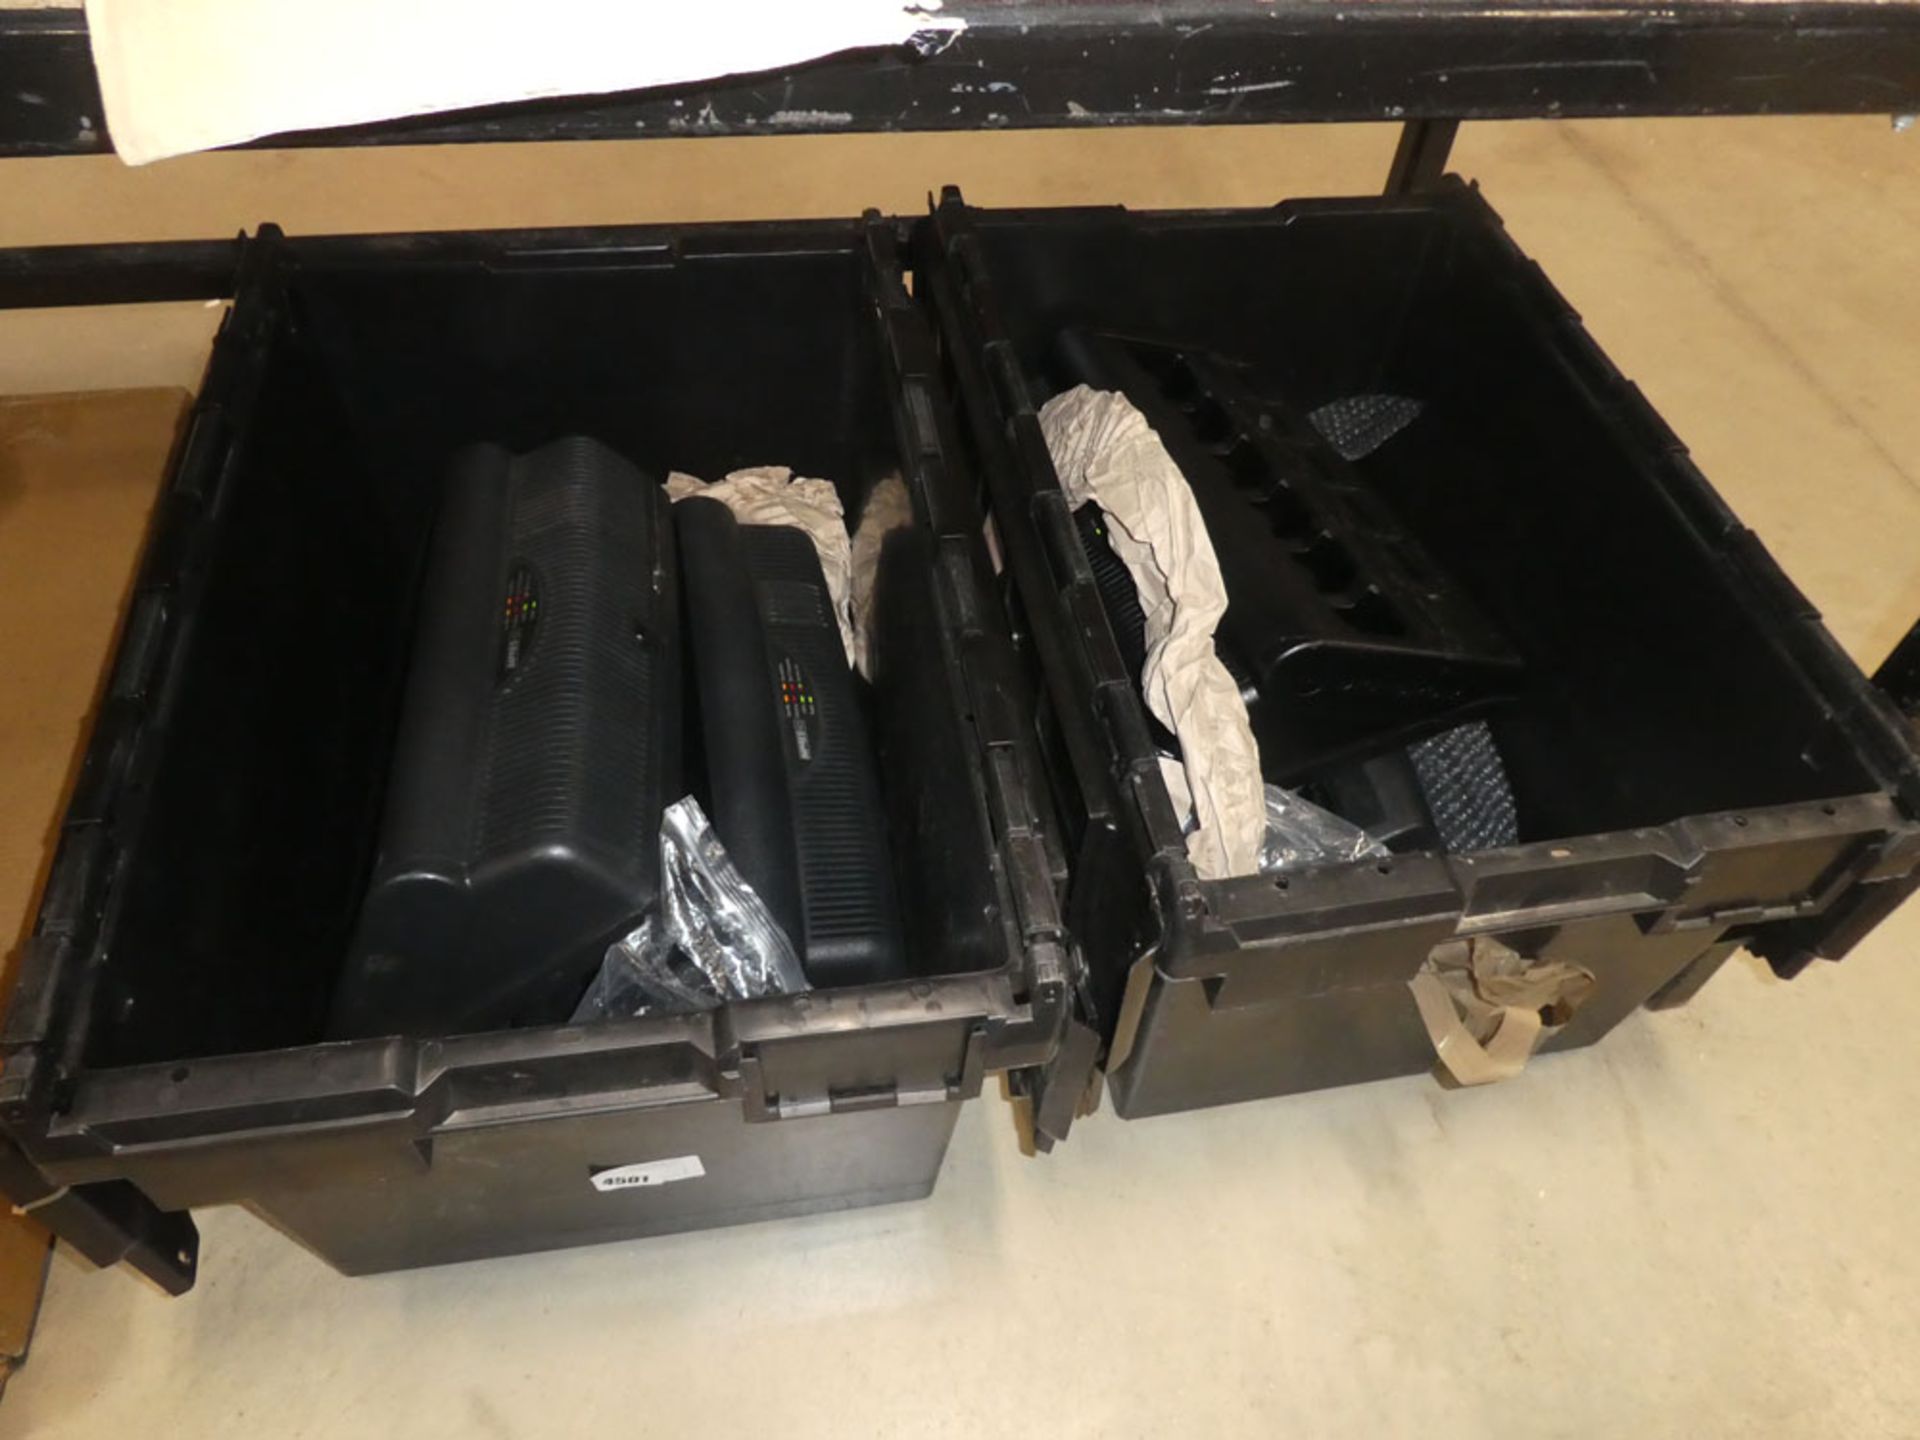 2 plastic crates containing Motorola 2-way radio charging point and batteries, no radios